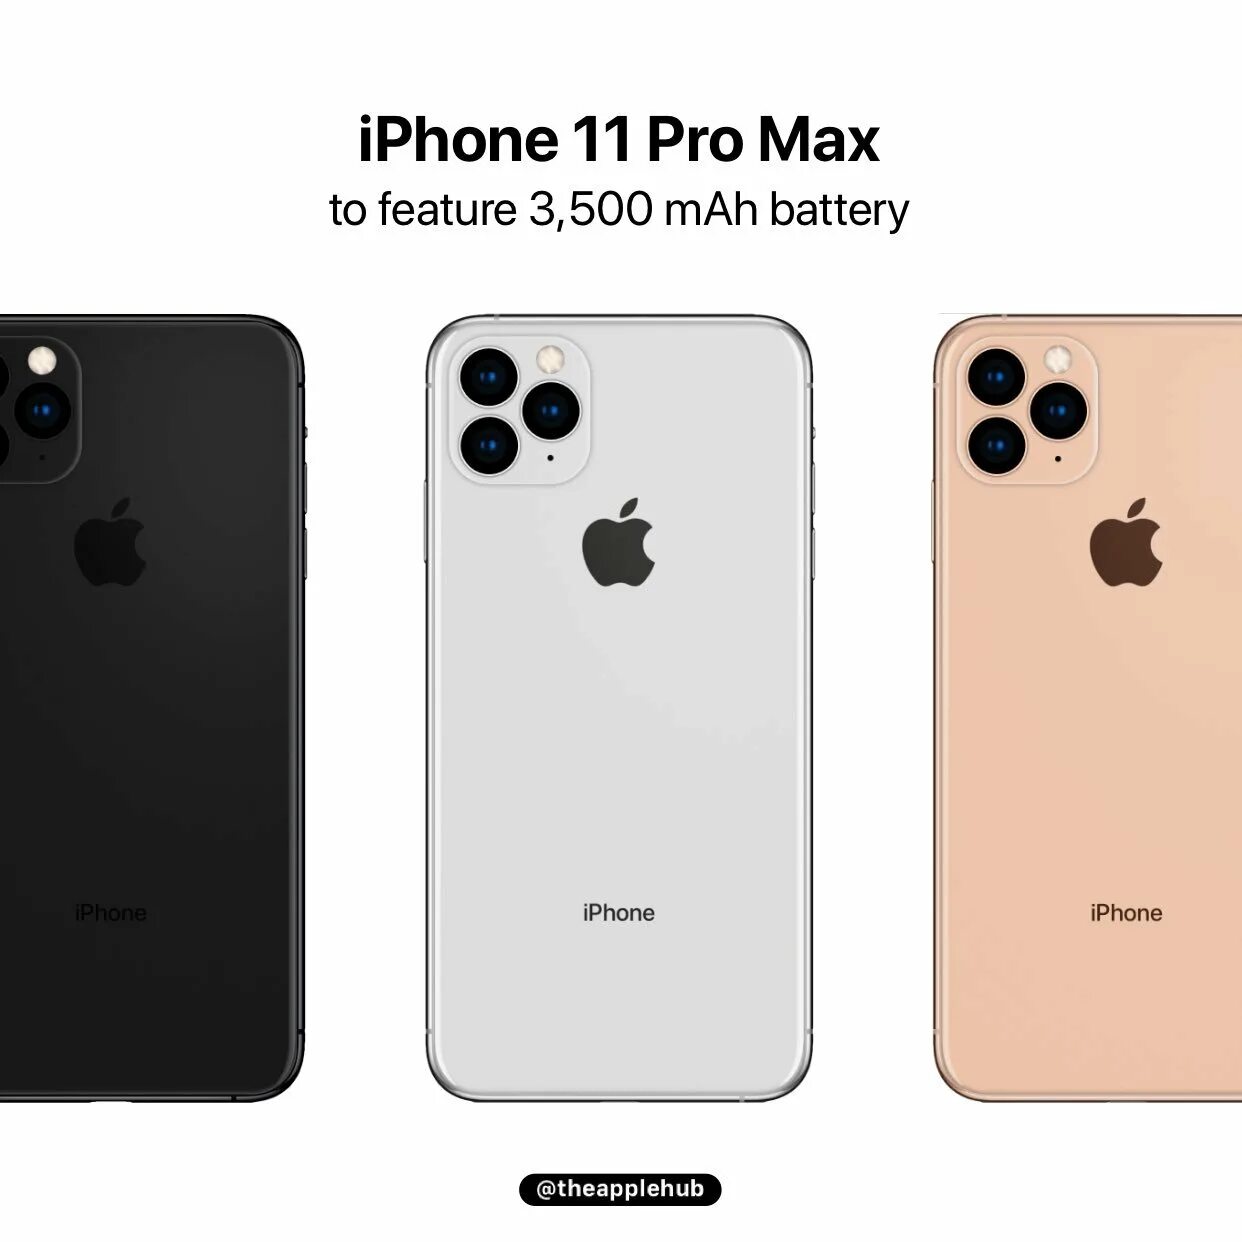 Айфон 11 про герцы. Iphone 11 Pro Max. Iphone 11 Pro Max габариты. Iphone 11 Pro Max габариты корпуса. Iphone 11 Pro габариты.